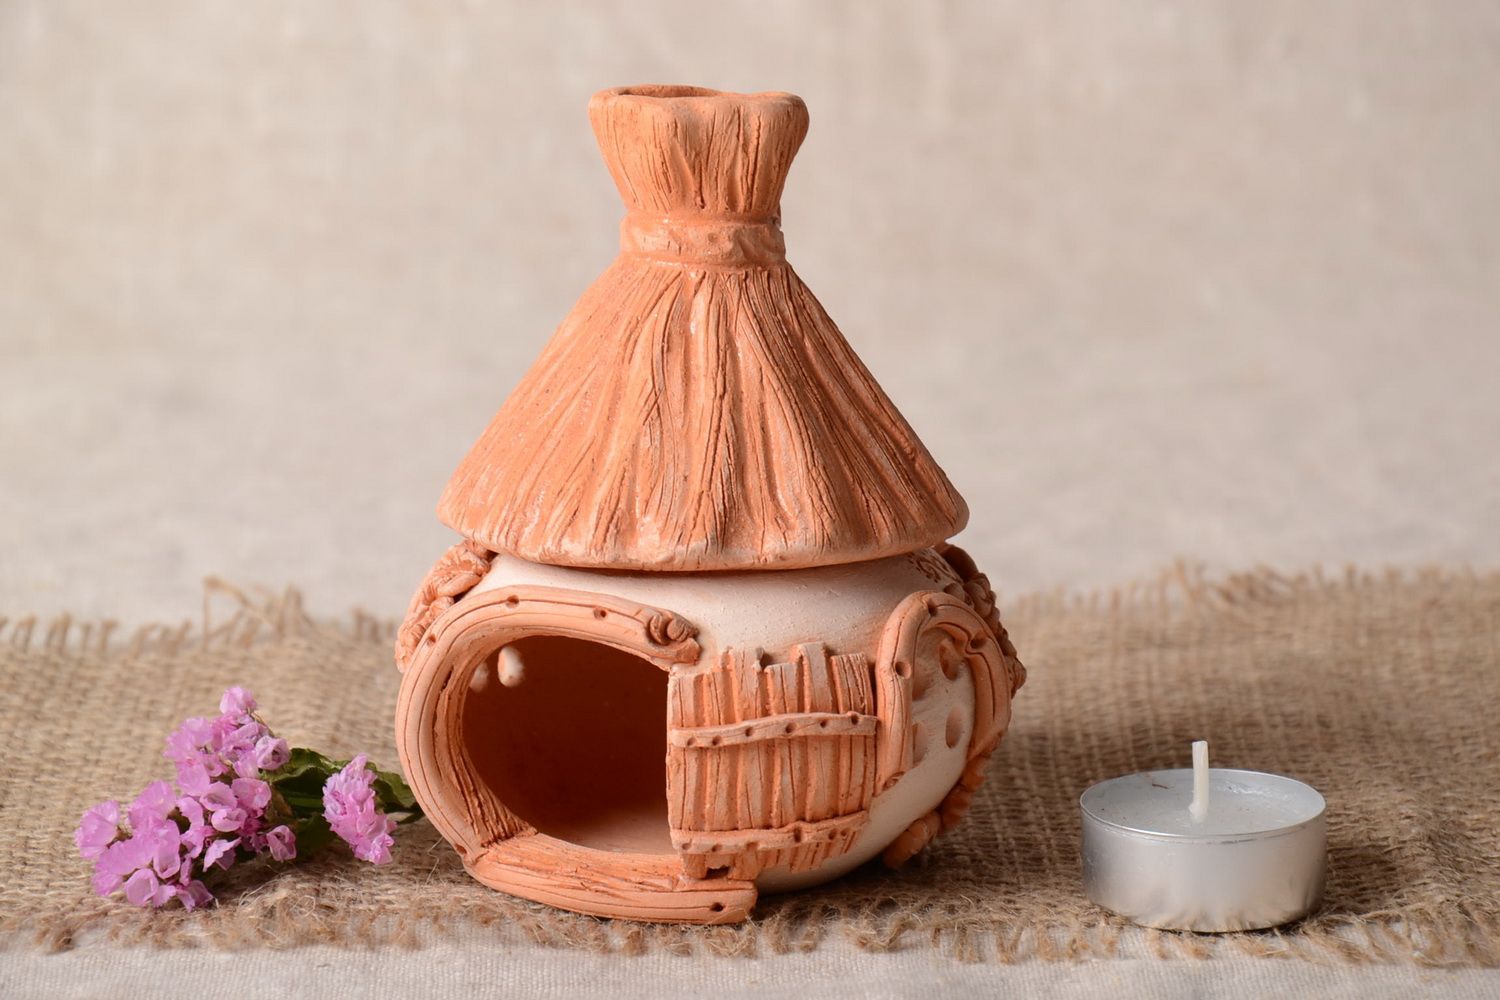 Handmade ceramic aroma lamp stylish candlestick made of clay home decor ideas photo 1